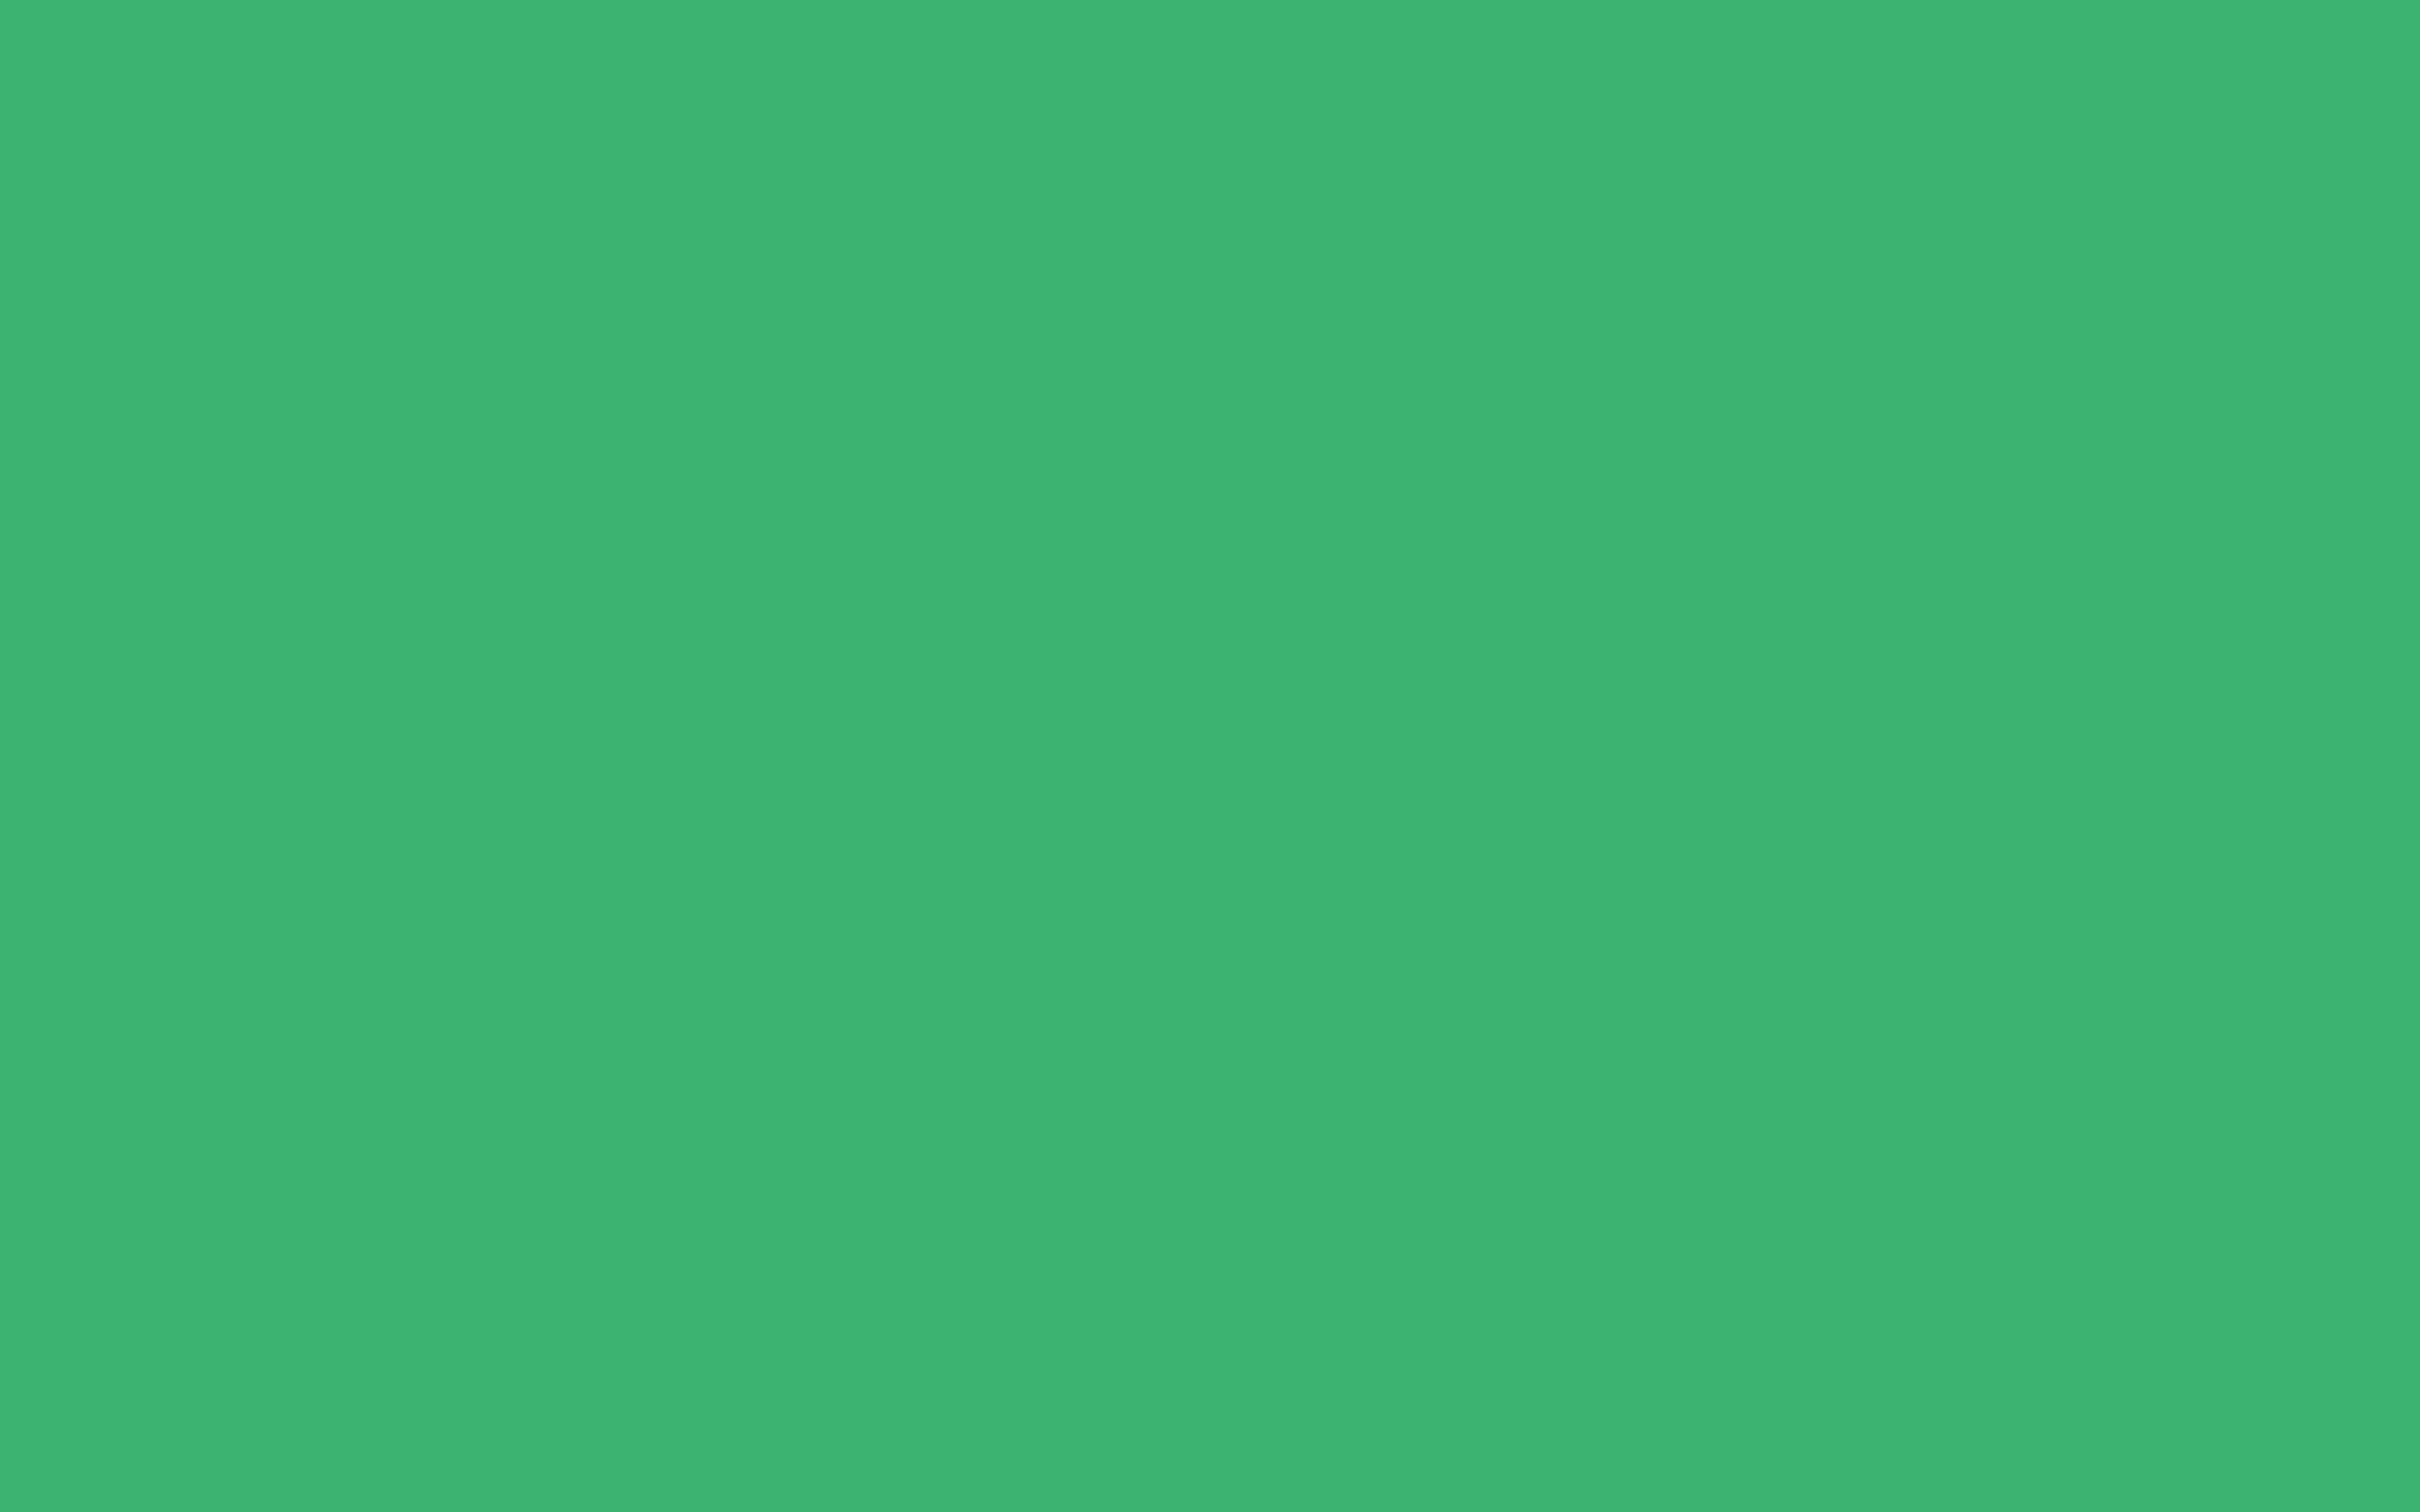 medium sea green/#3cb371 hex color code/strong green-cyan/strong ...